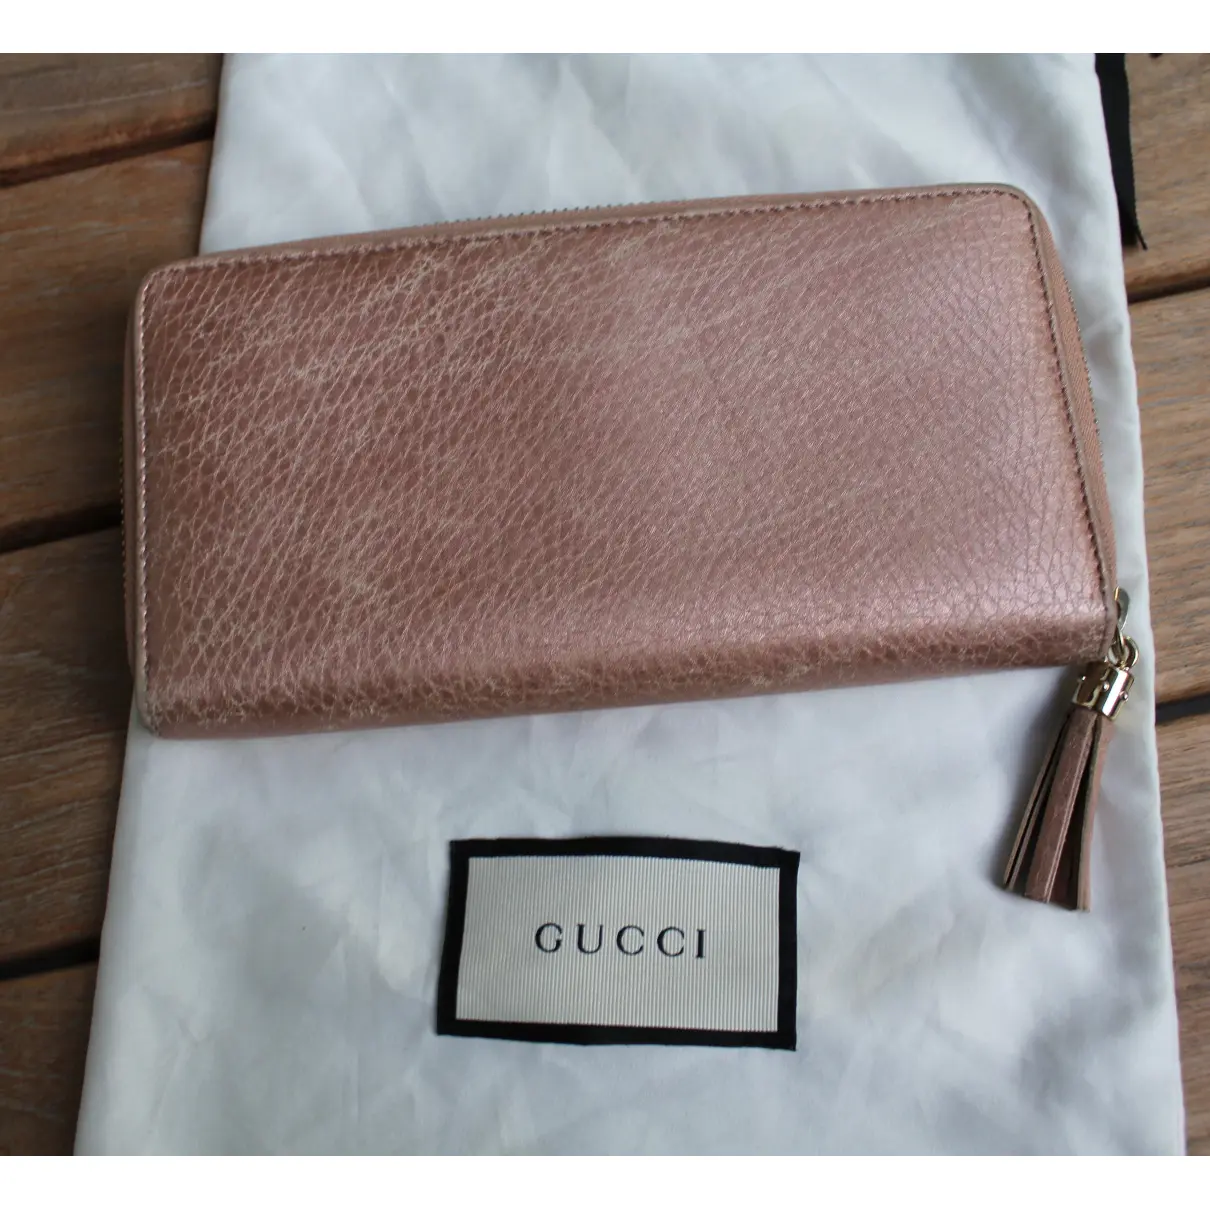 Buy Gucci Soho leather wallet online - Vintage